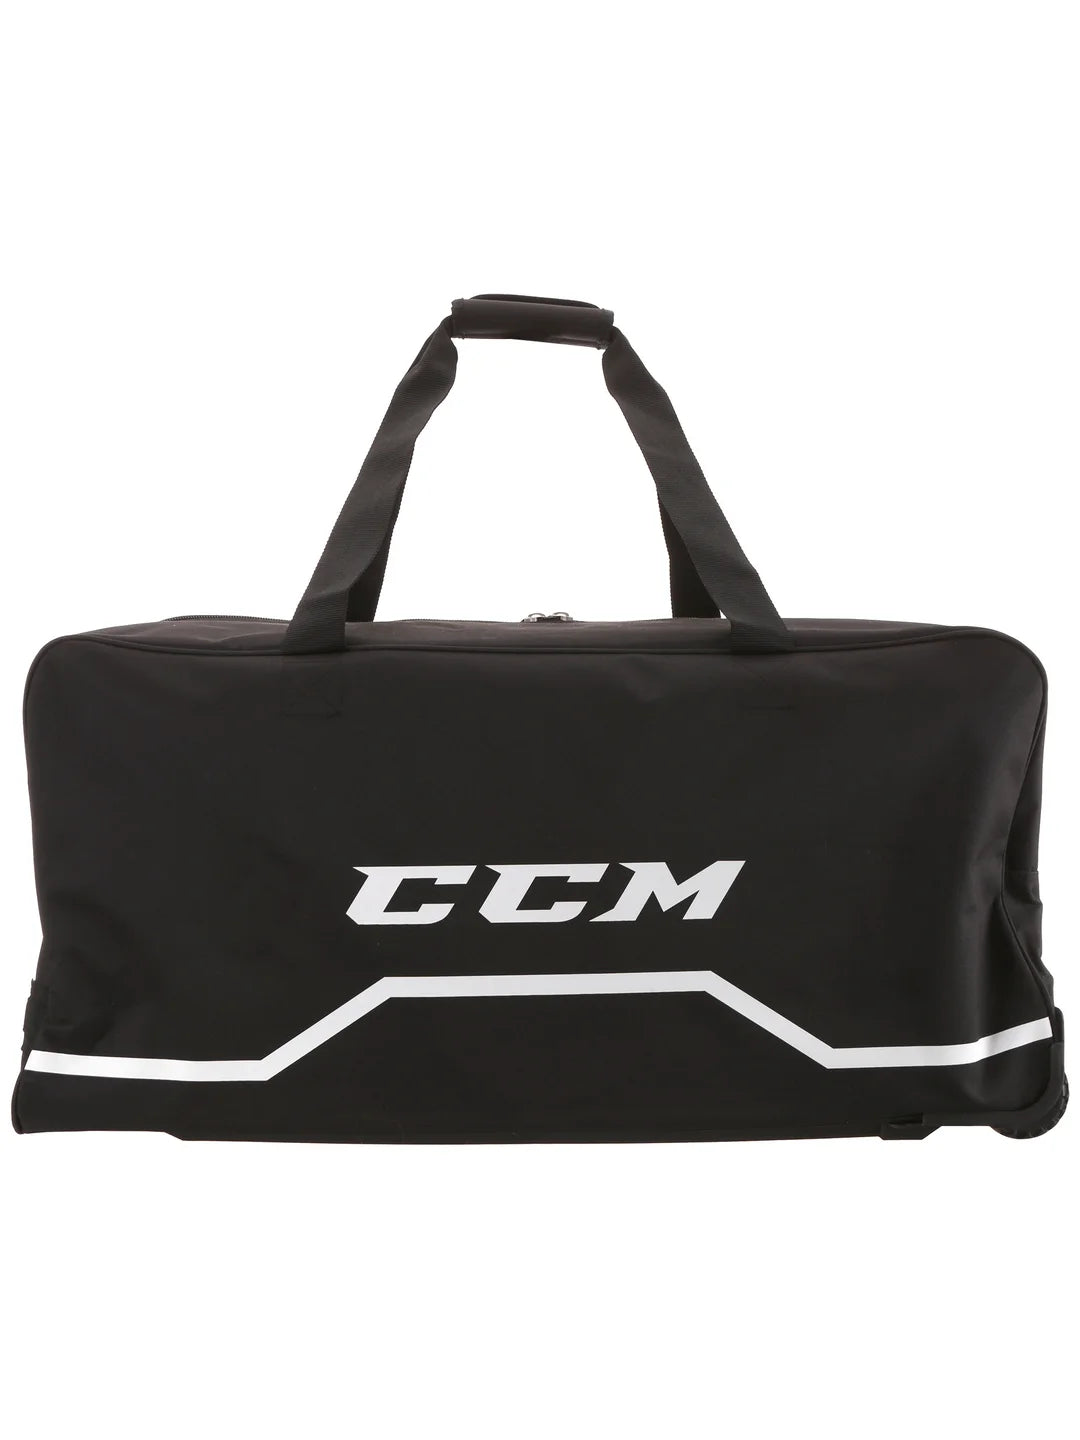 CCM 320 Player Core Wheeled Hockey Equipment Bag